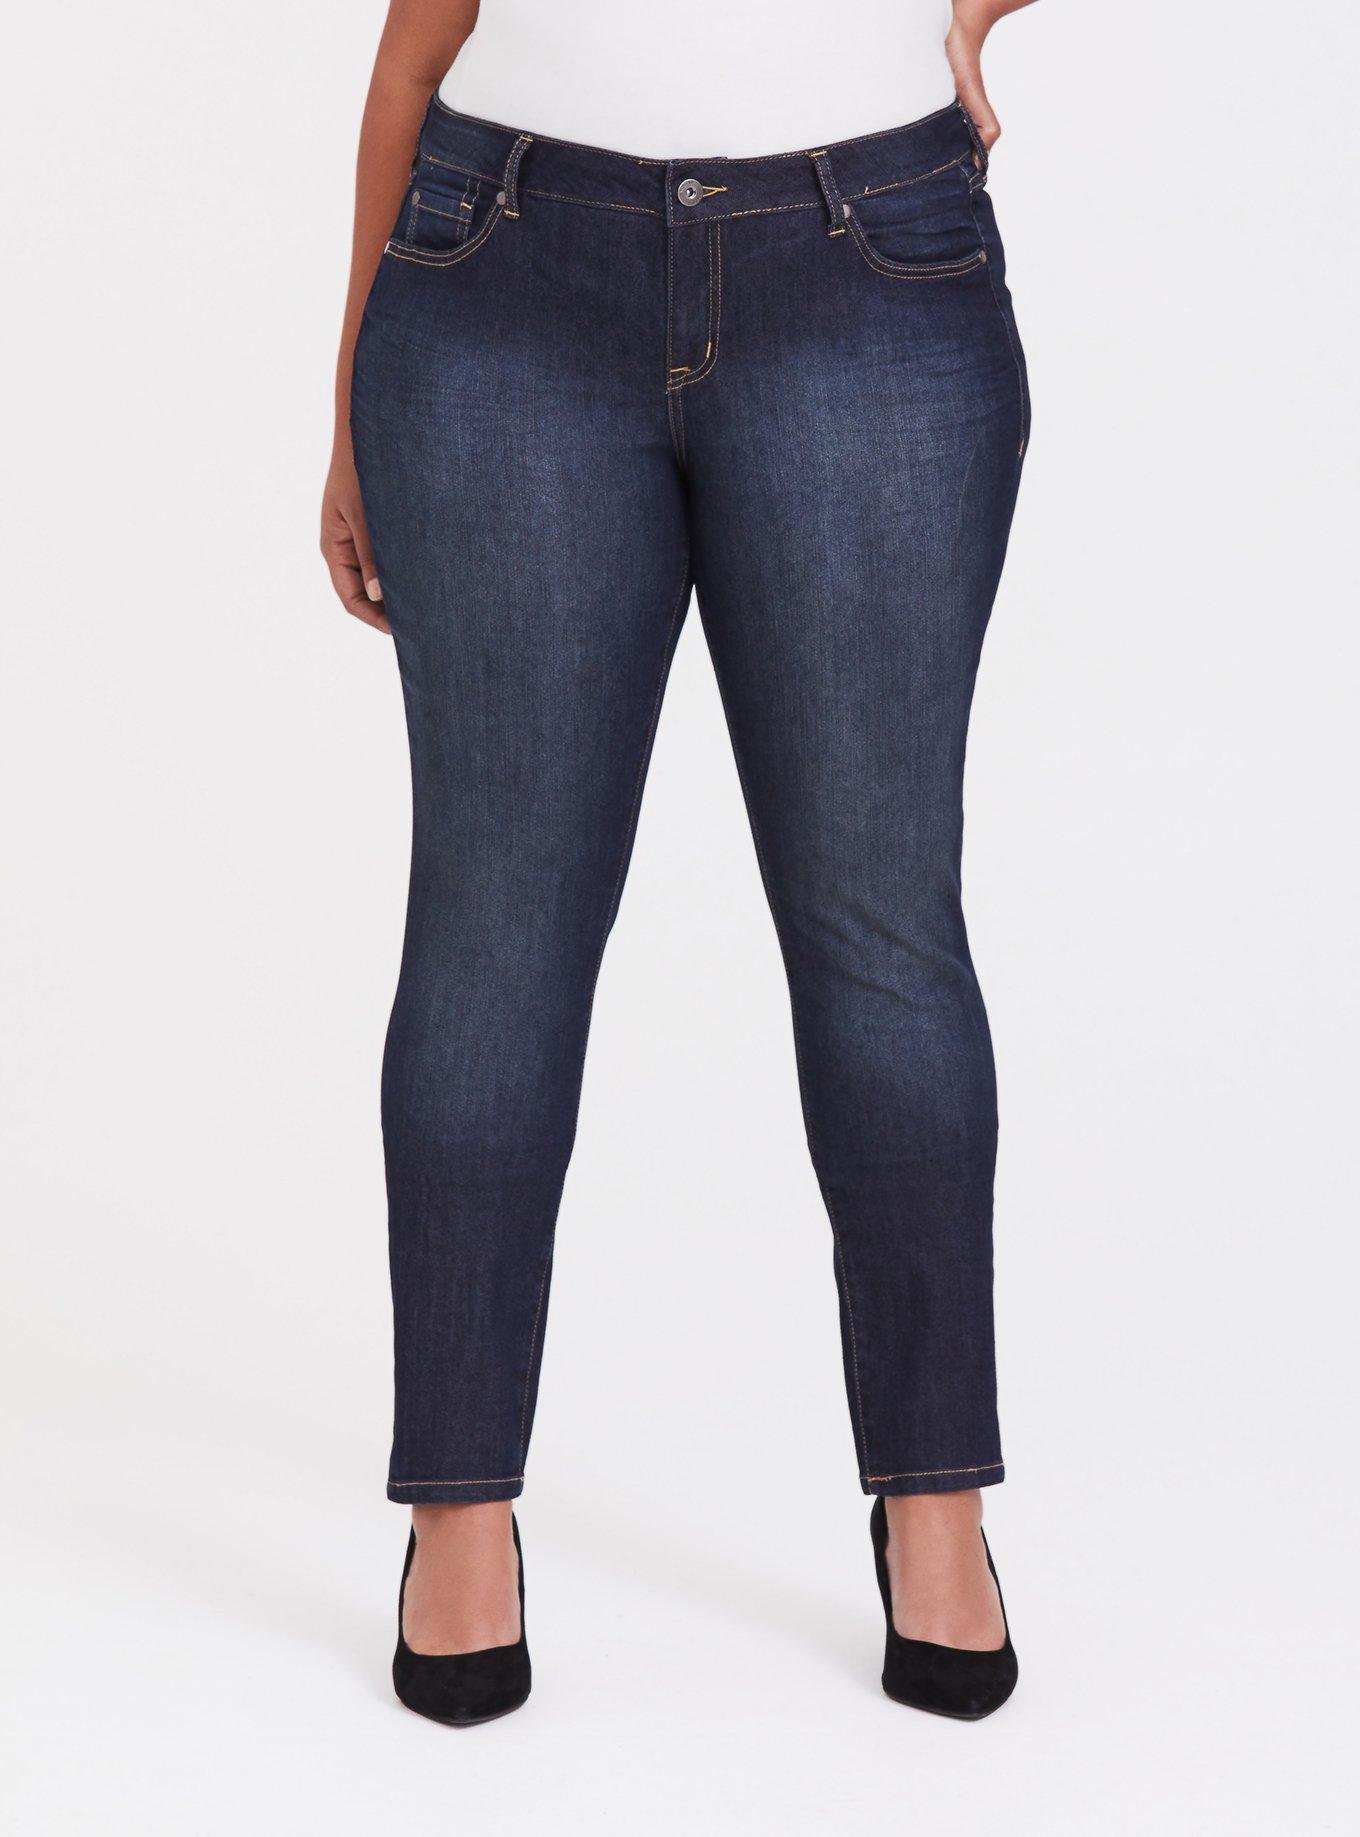 Spanx Slim-X Casual Dark rinse Capri Jeans sz 27 - $46 - From maria